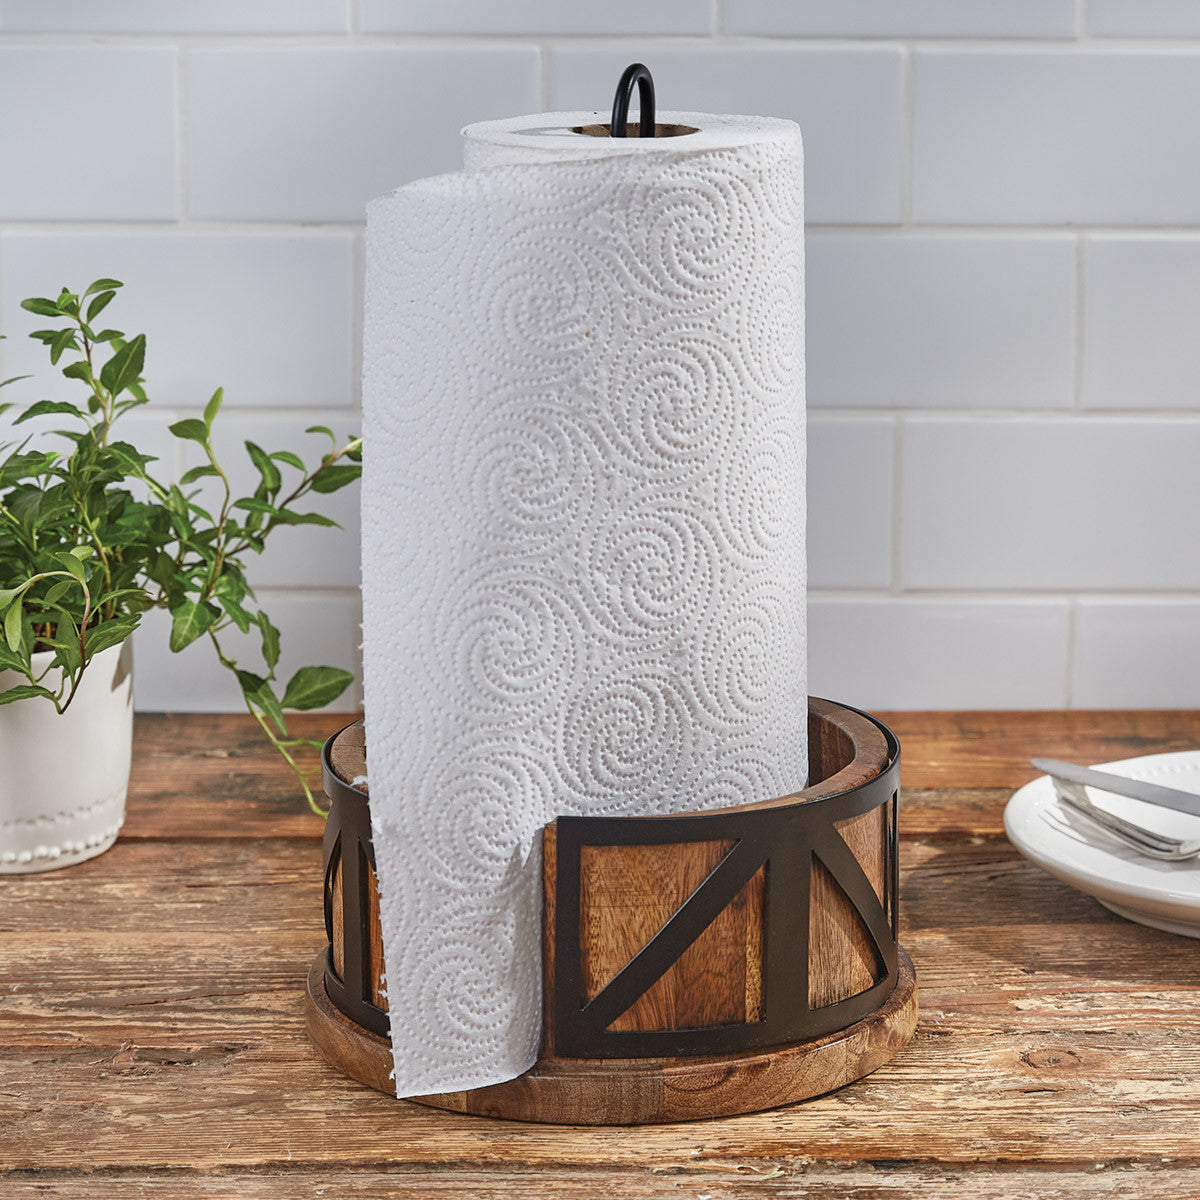 Elegant Iron Paper Towel Holders for Stylish Kitchens